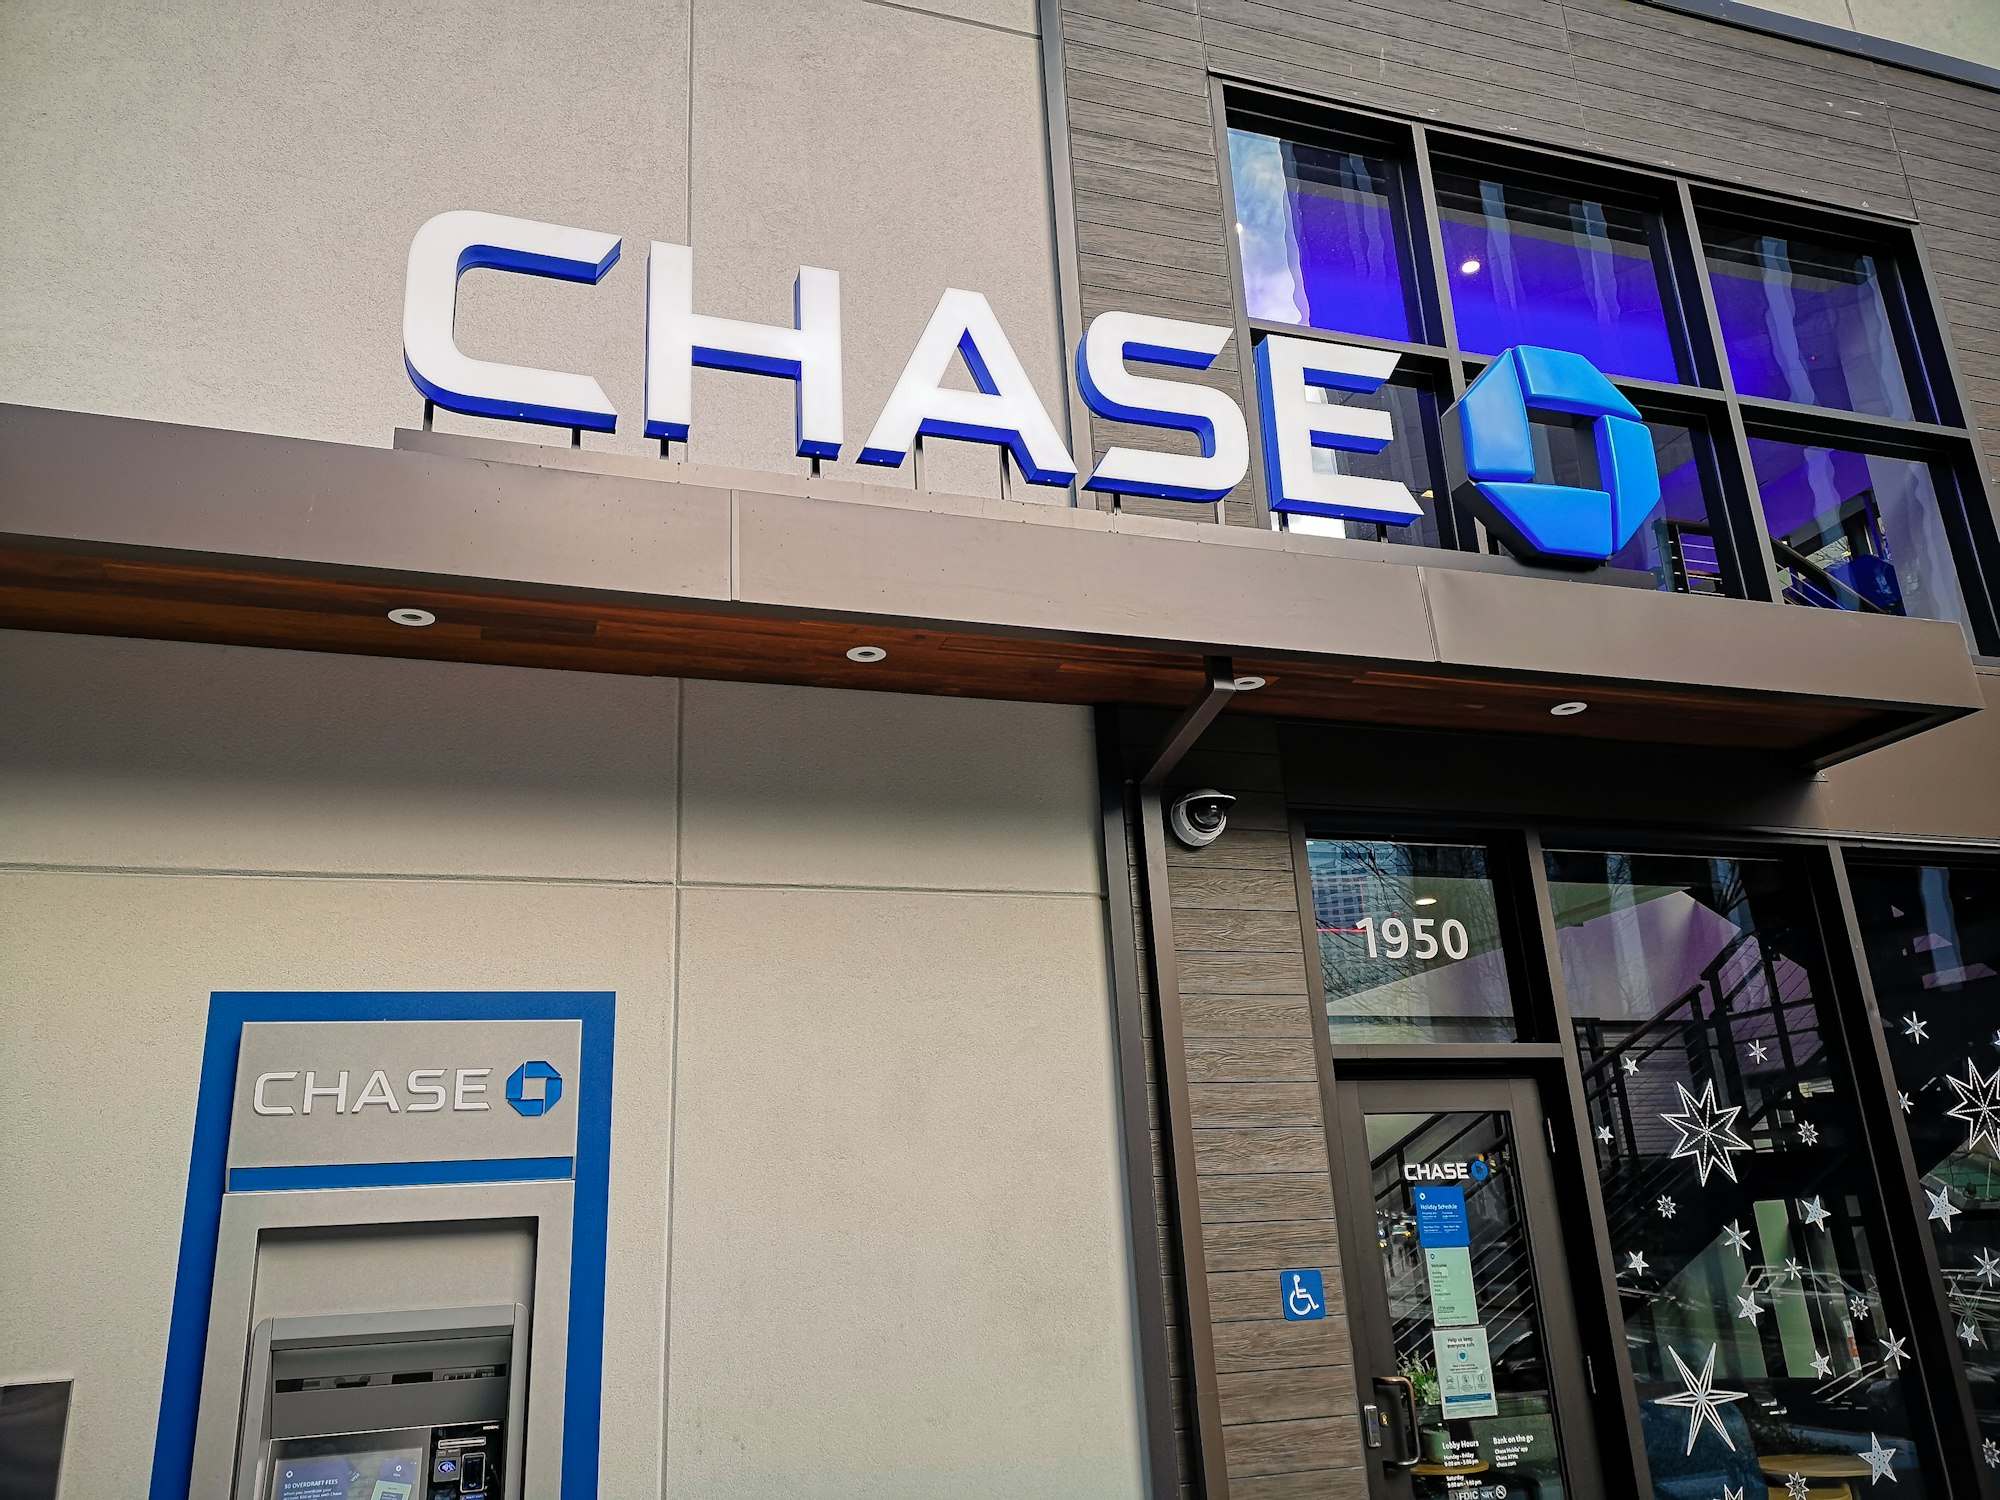 Chase Bank branch in Seattle, Washington